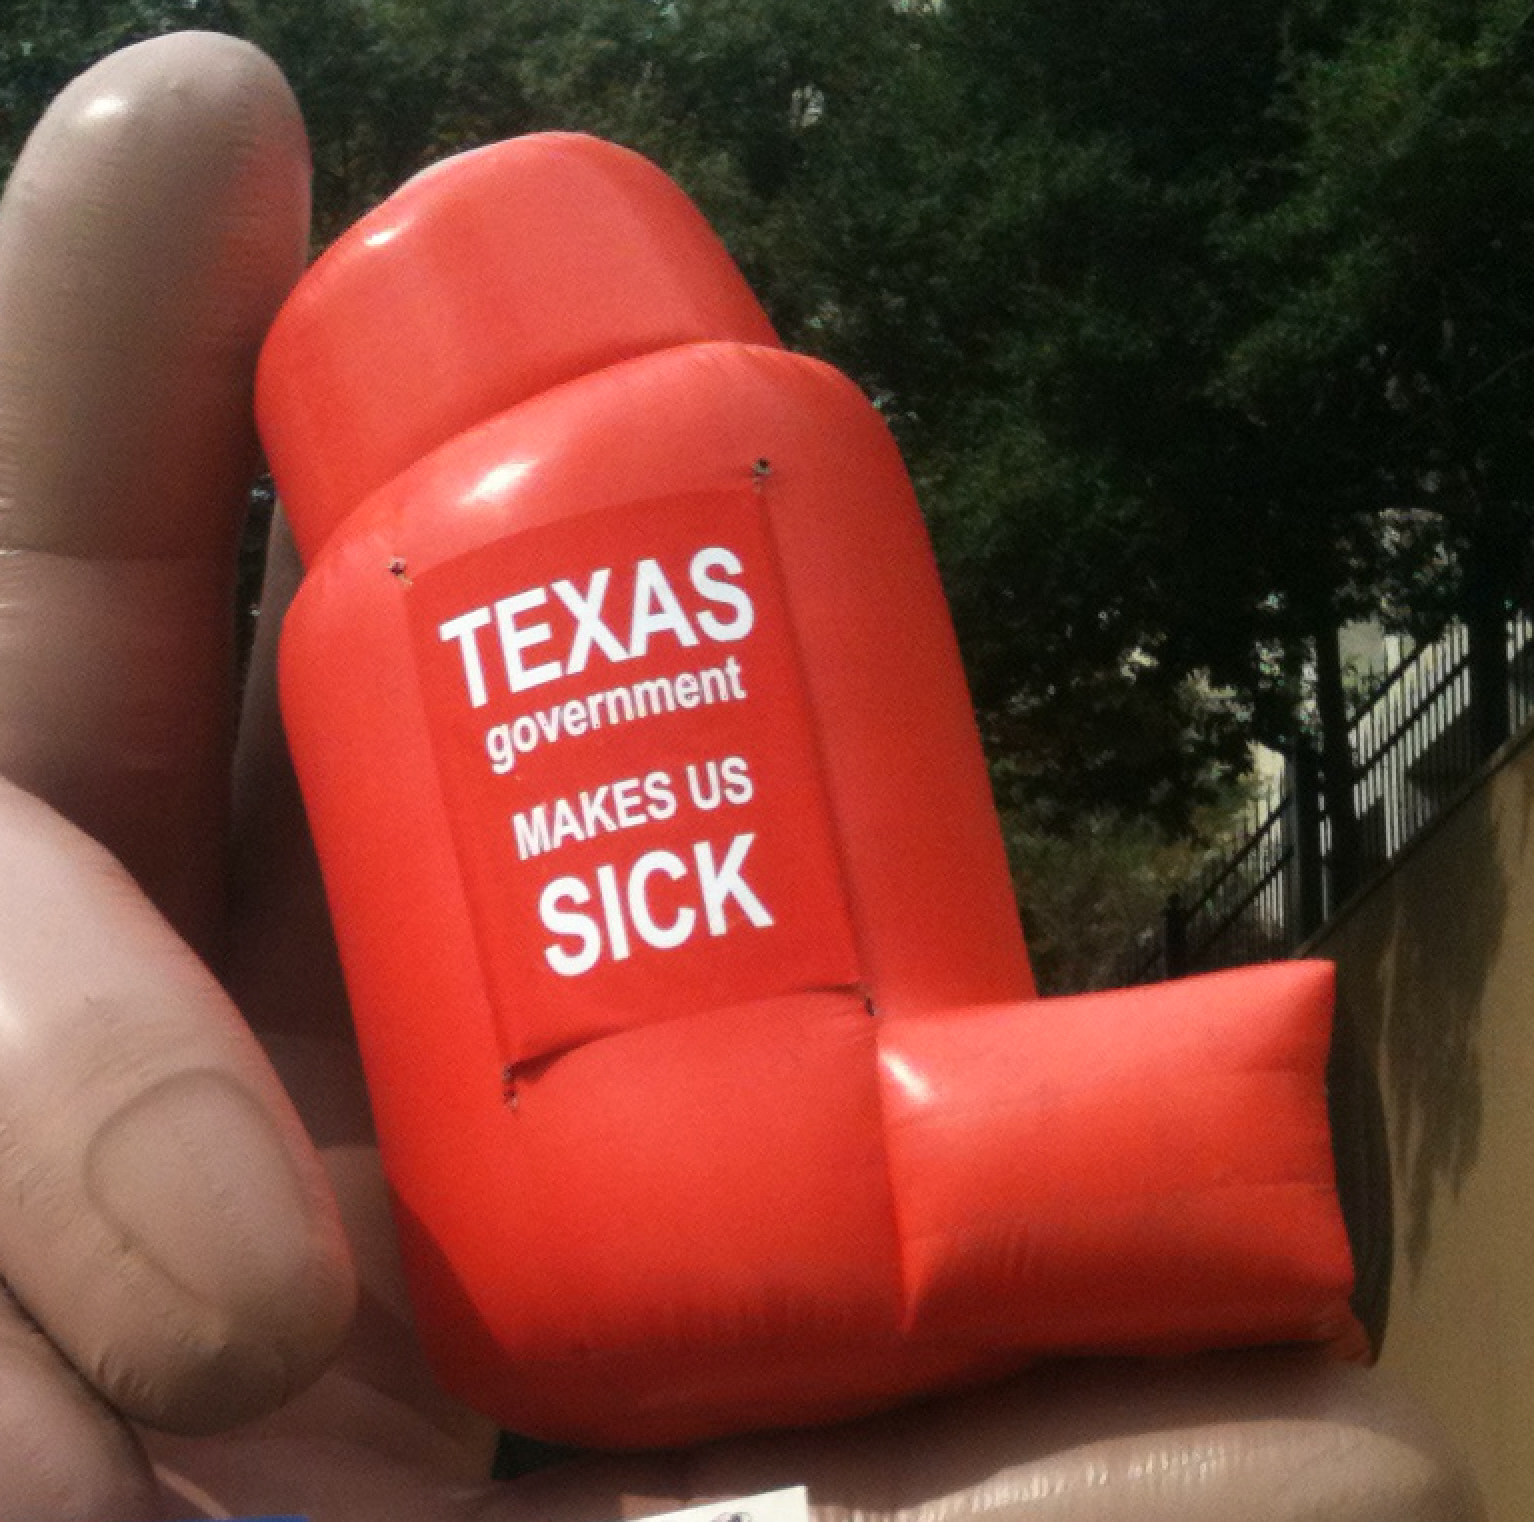 Texas Gov makes us sick